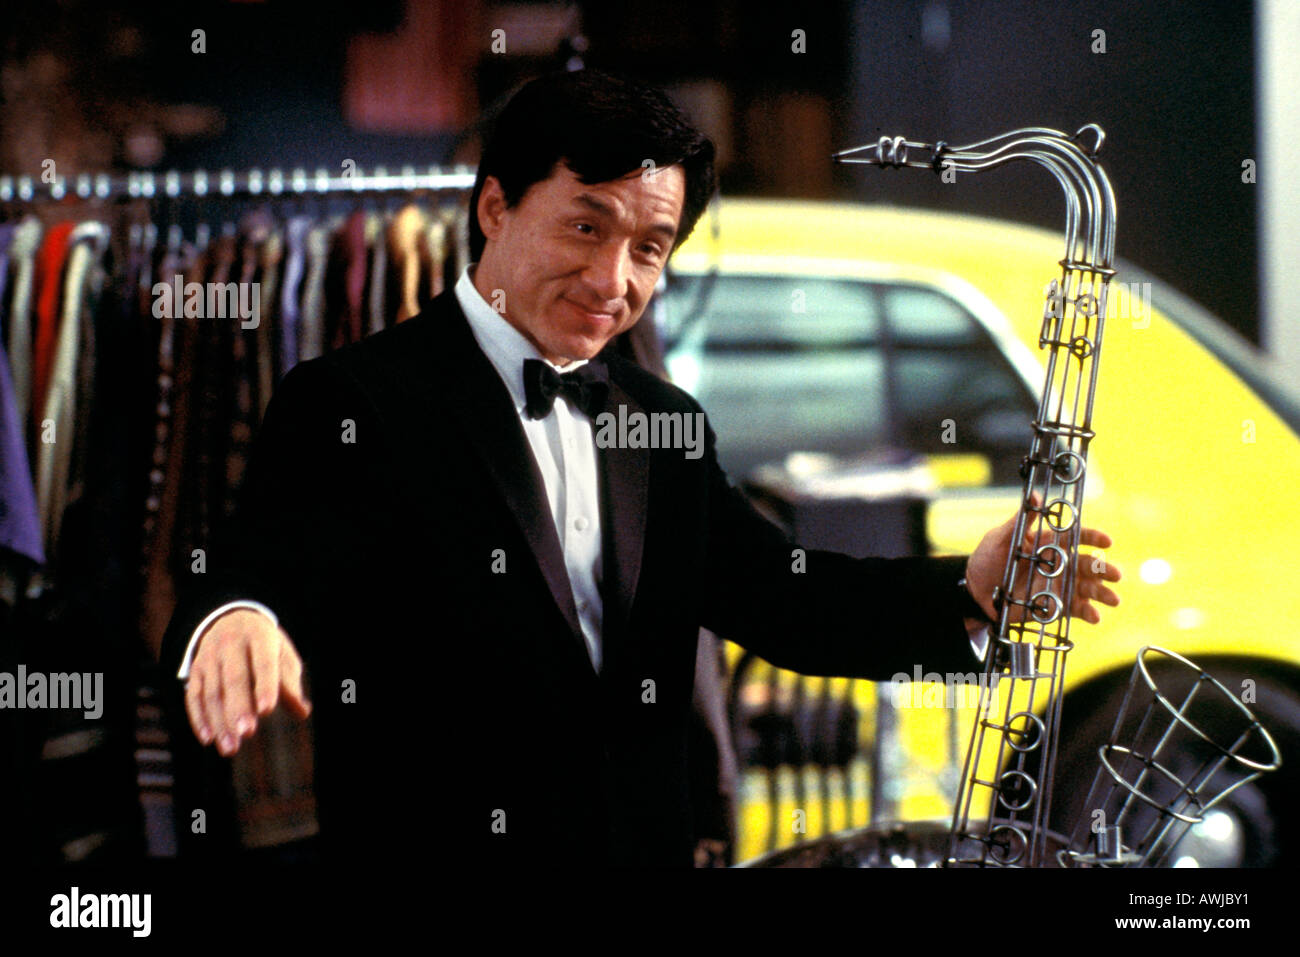 DER Smoking 2002 Dream Works-Film mit Jackie Chan Stockfoto